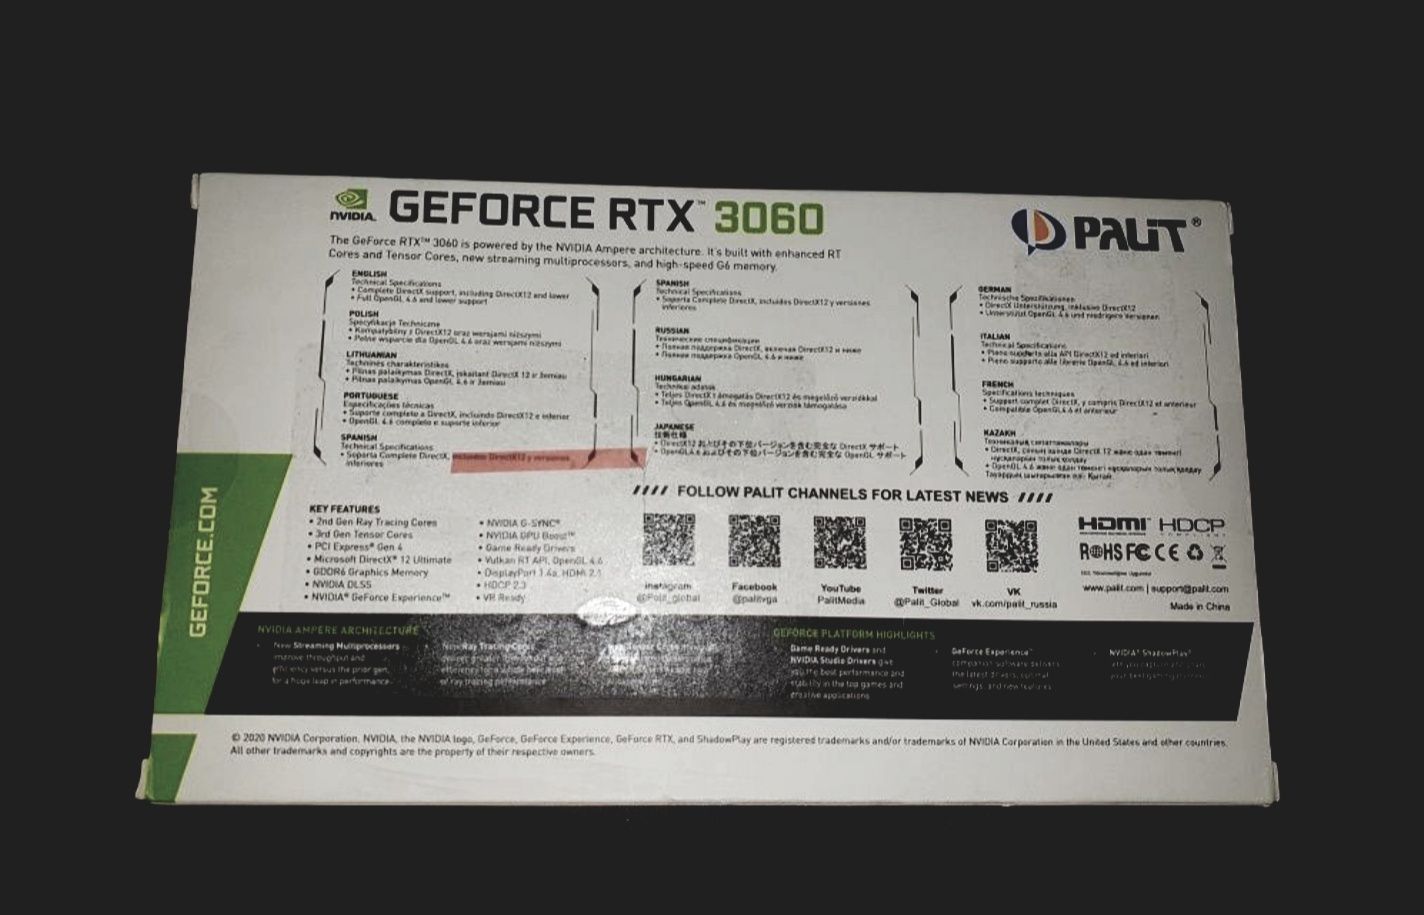 Placa Video Palit GeForce RTX 3060 StormX 12GB GDDR6 192bit

Din luna